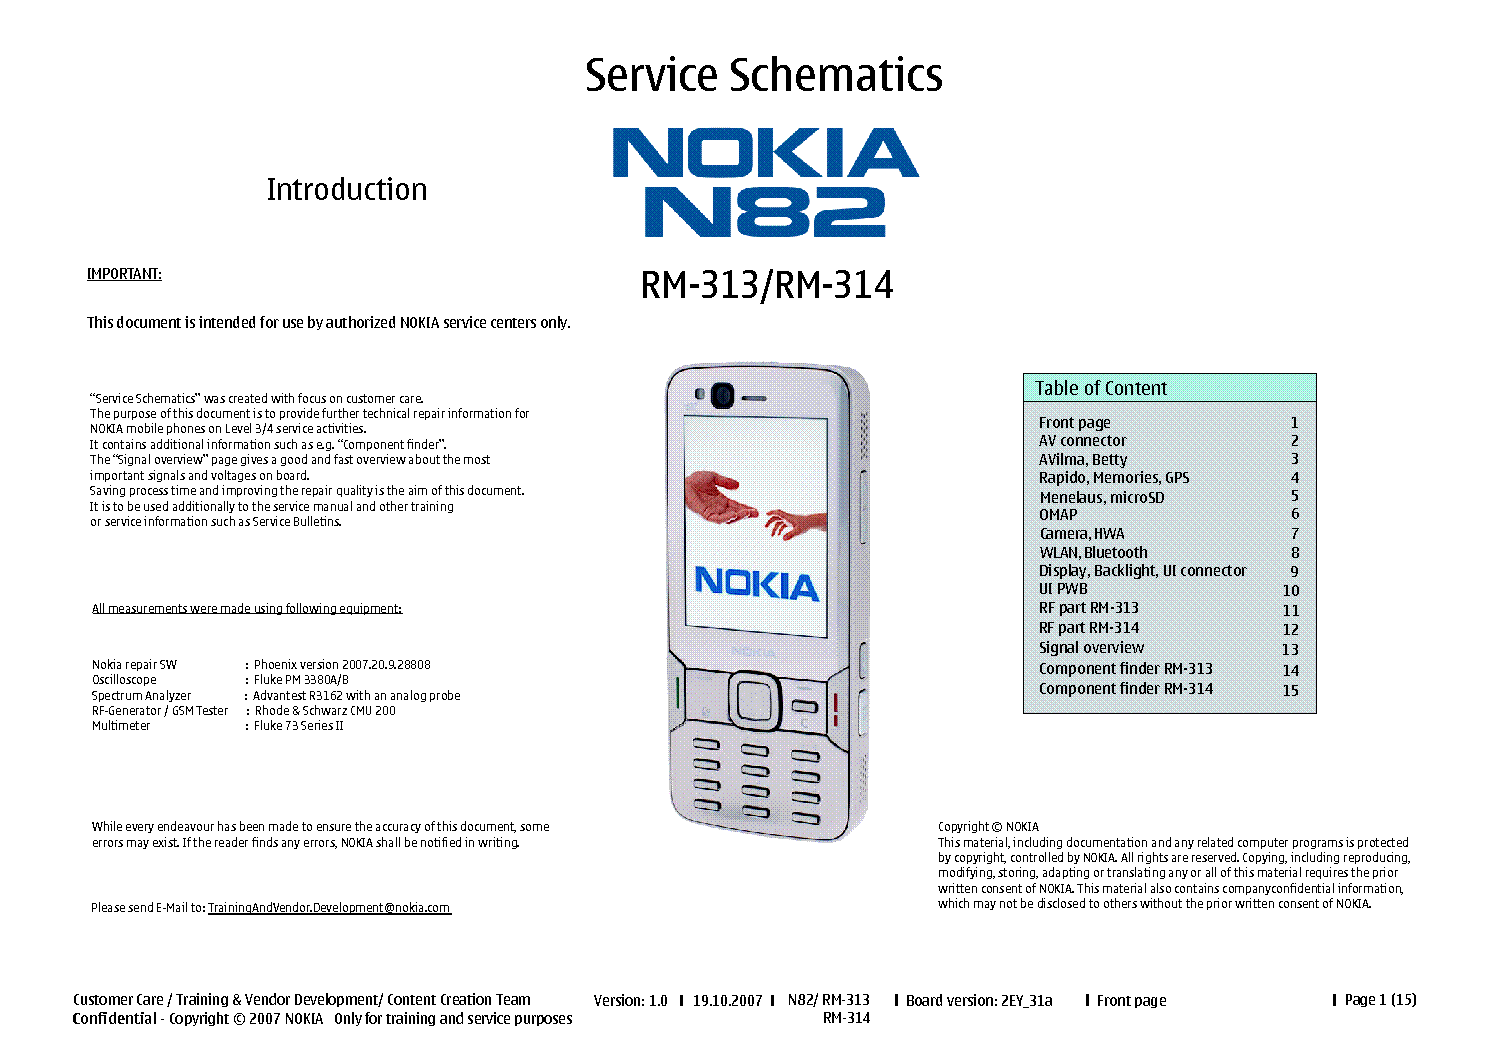 Nokia n82 rm 313 gr rus sw 35.0.002 v6.0